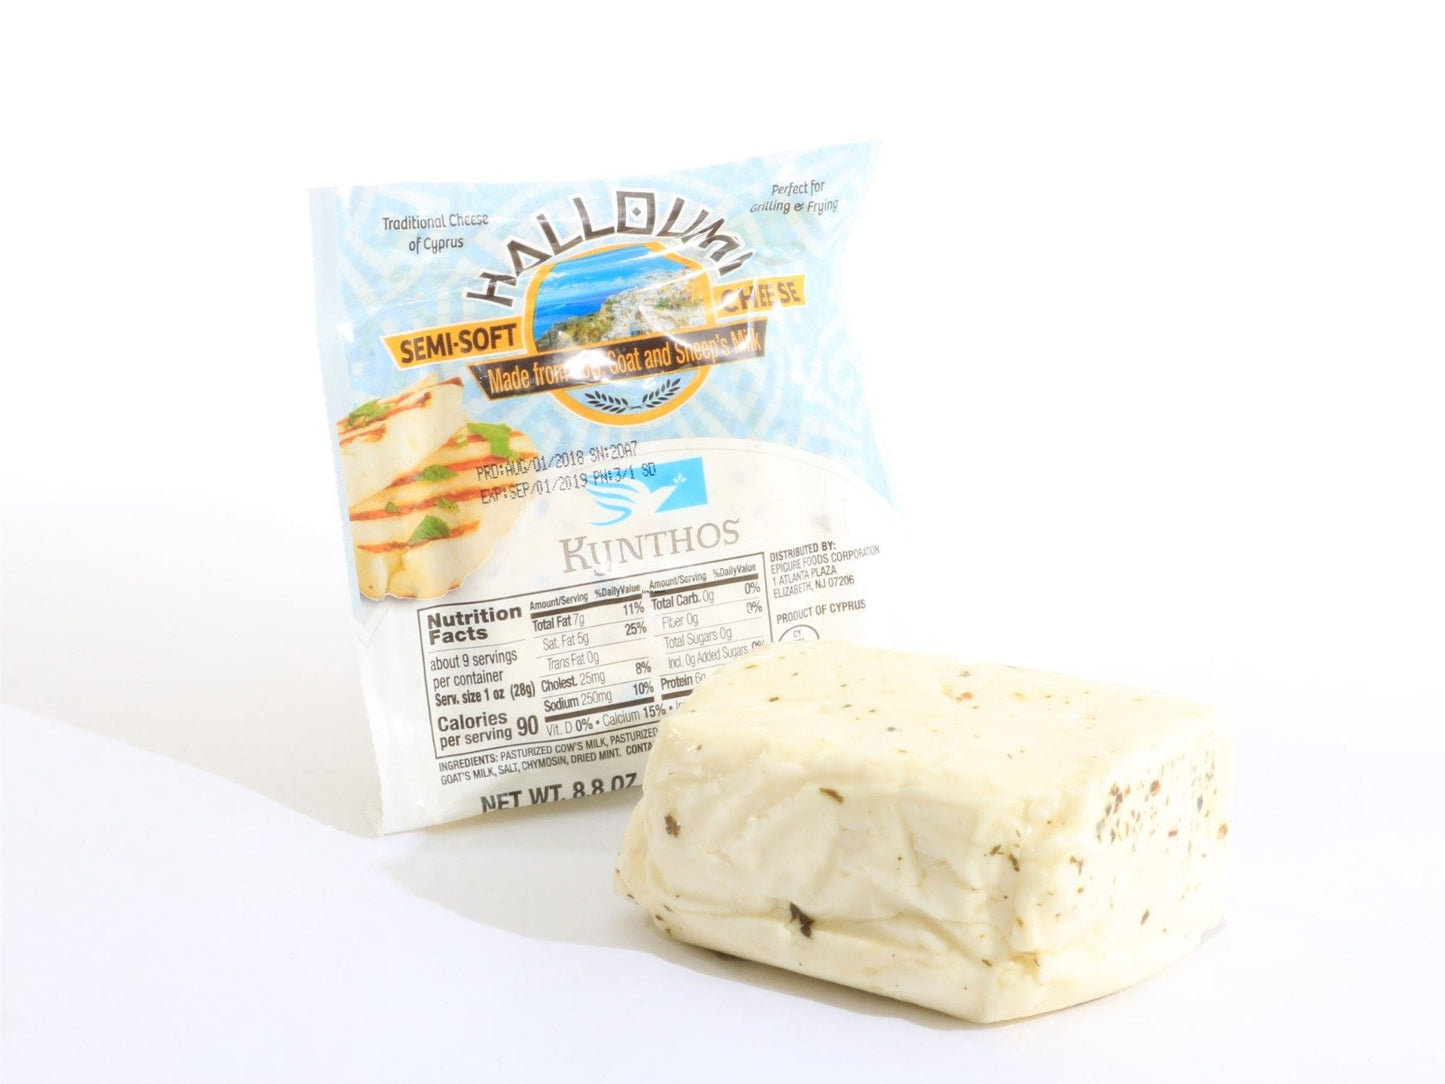 8.8 ounce of halloumi cheese